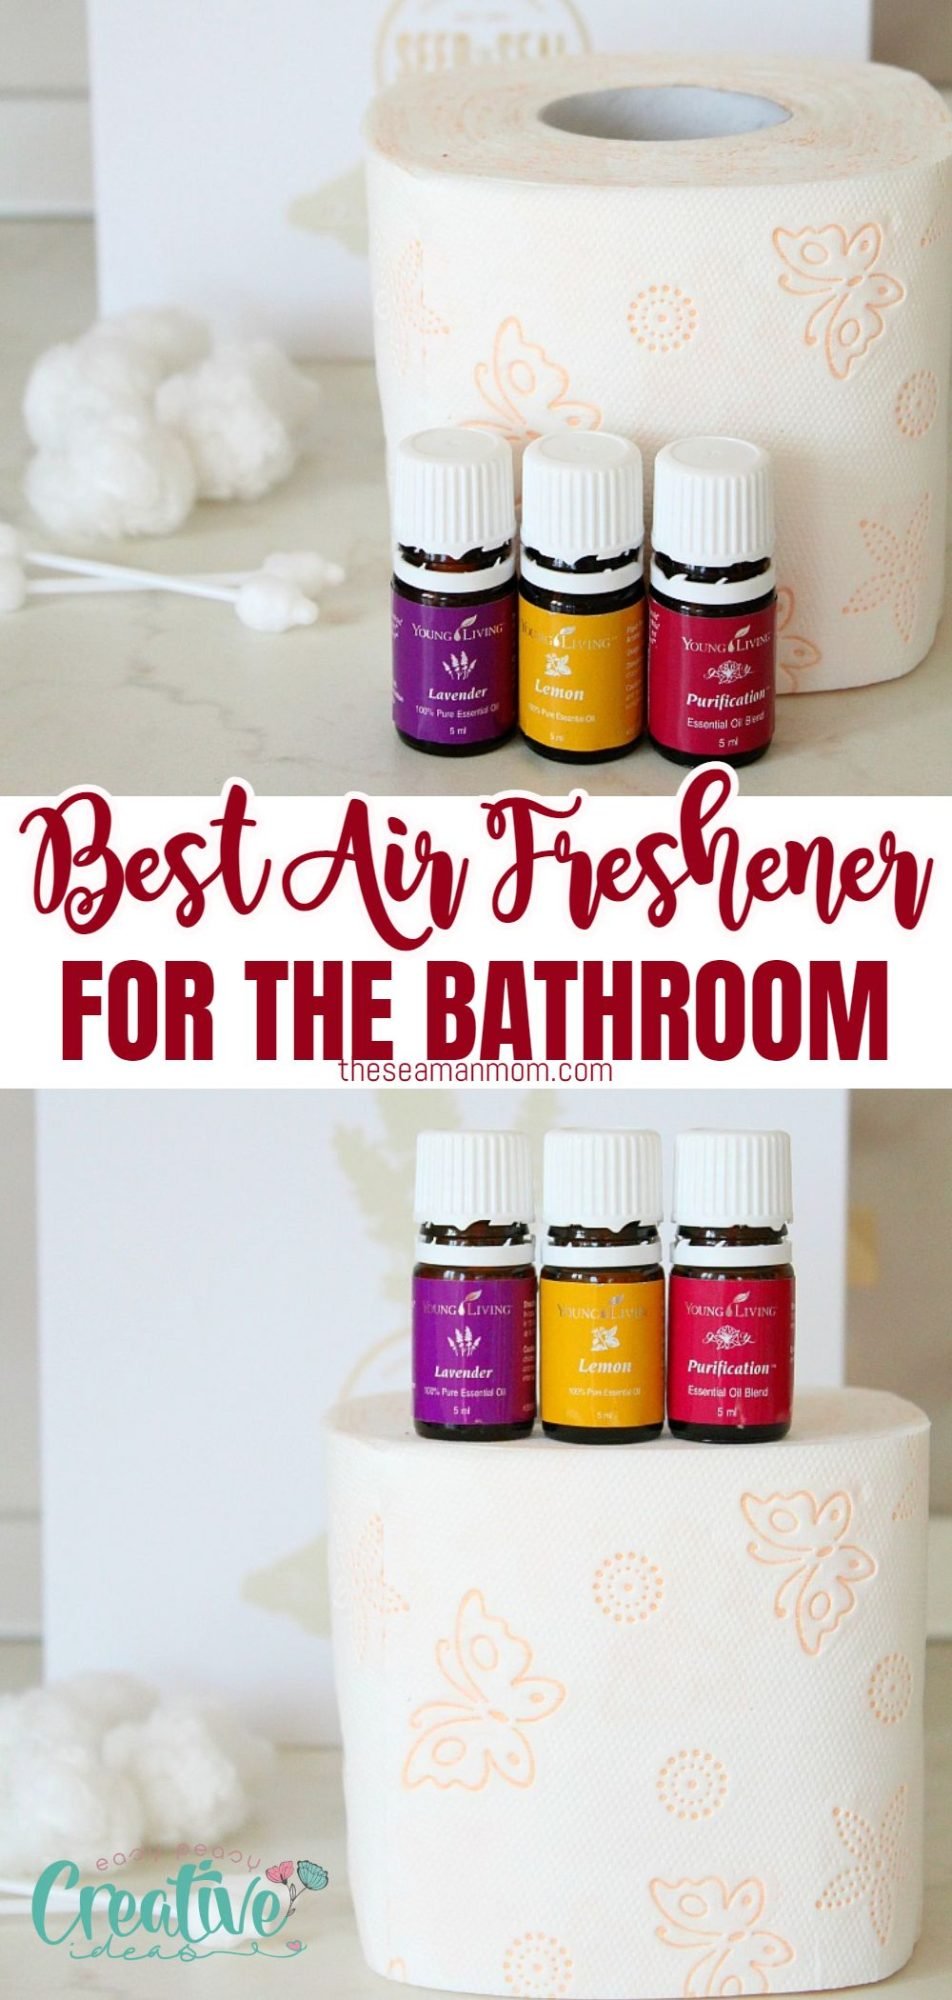 The best air freshener for bathroom